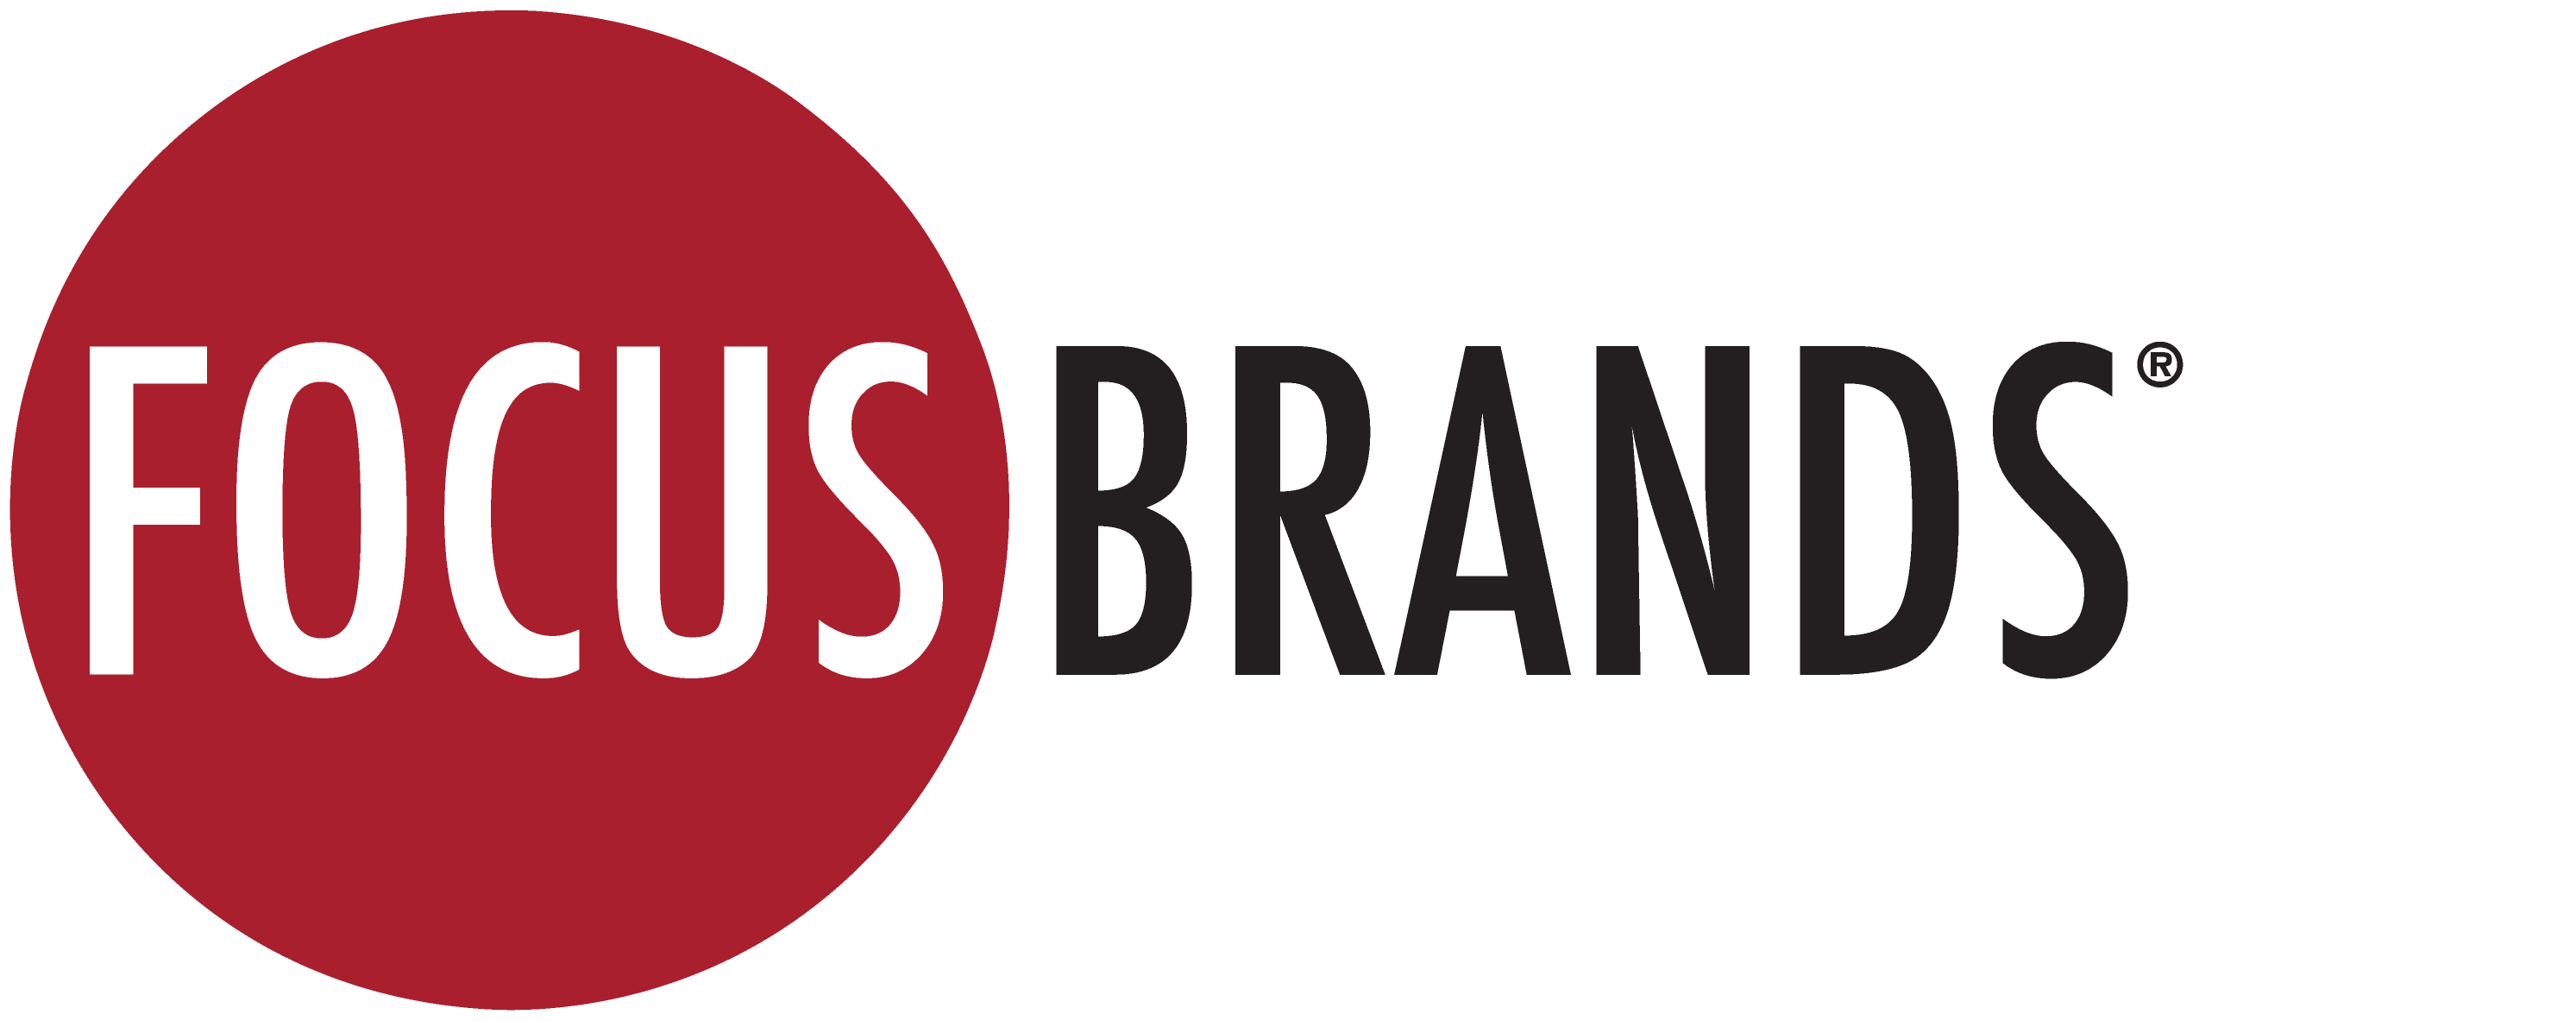 focus brands logo envision lcm lsi